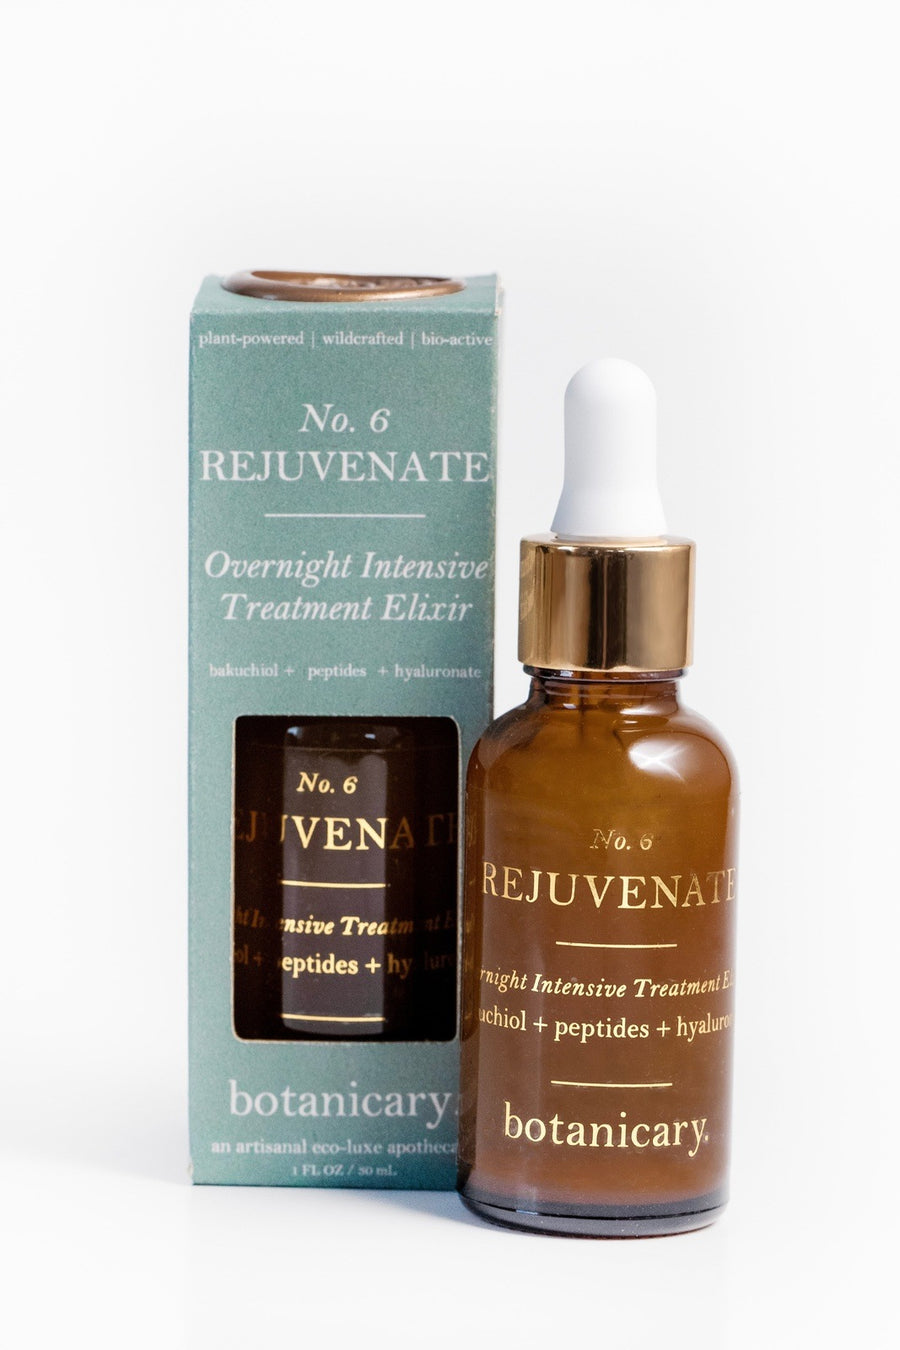 BOTANICARY No. 6 REJUVENATE - Overnight Intensive Treatment Elixir